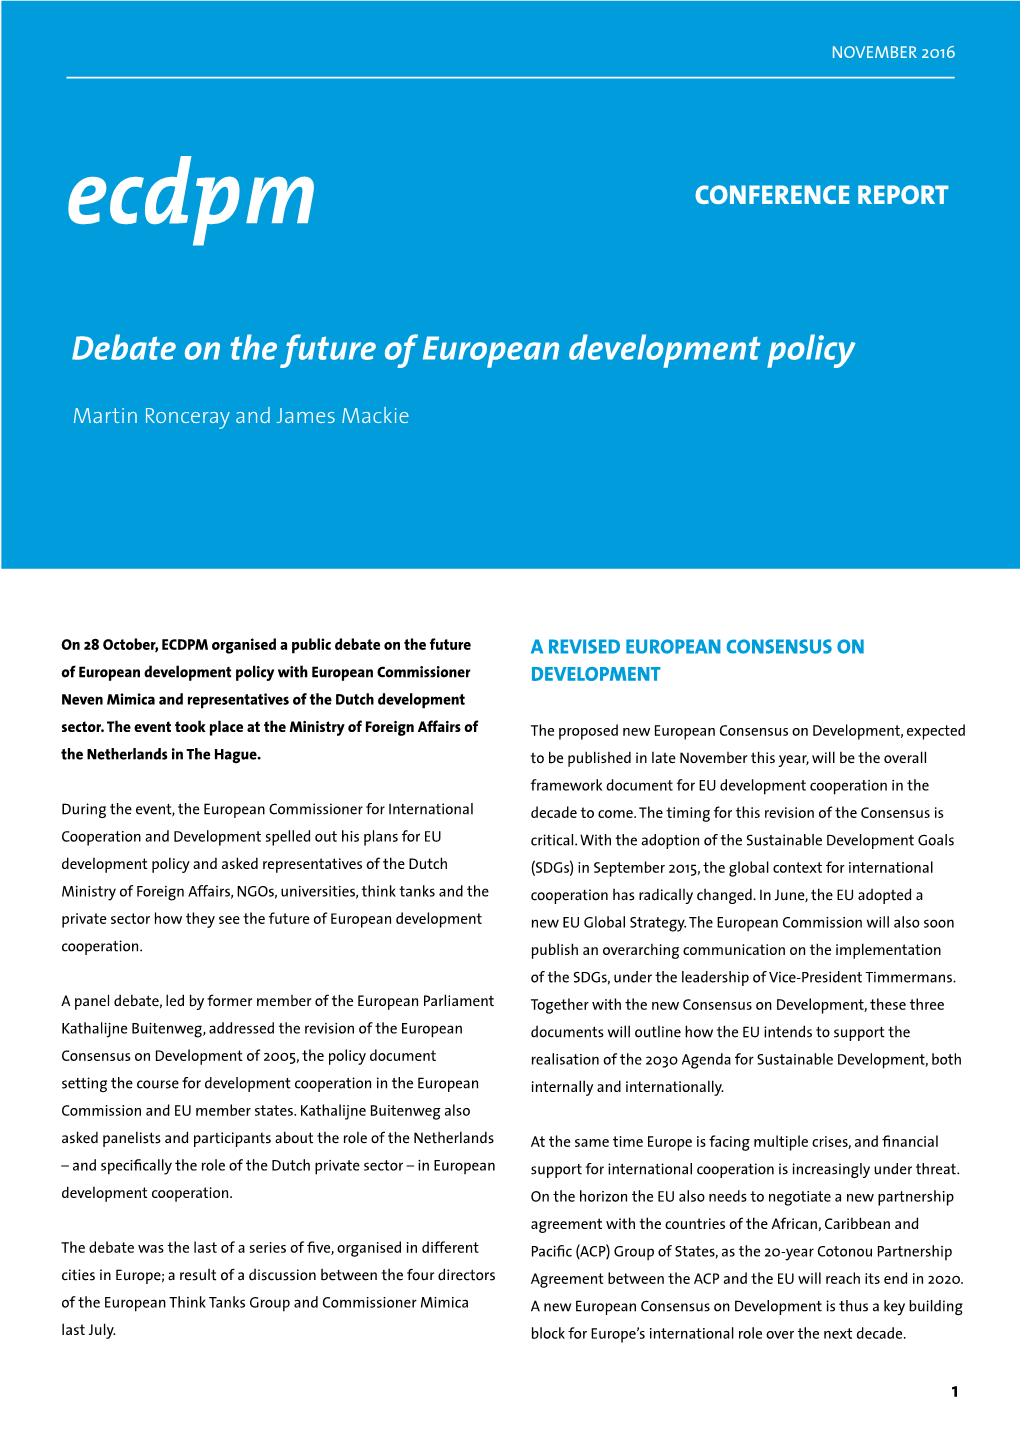 Debate on the Future of European Development Policy